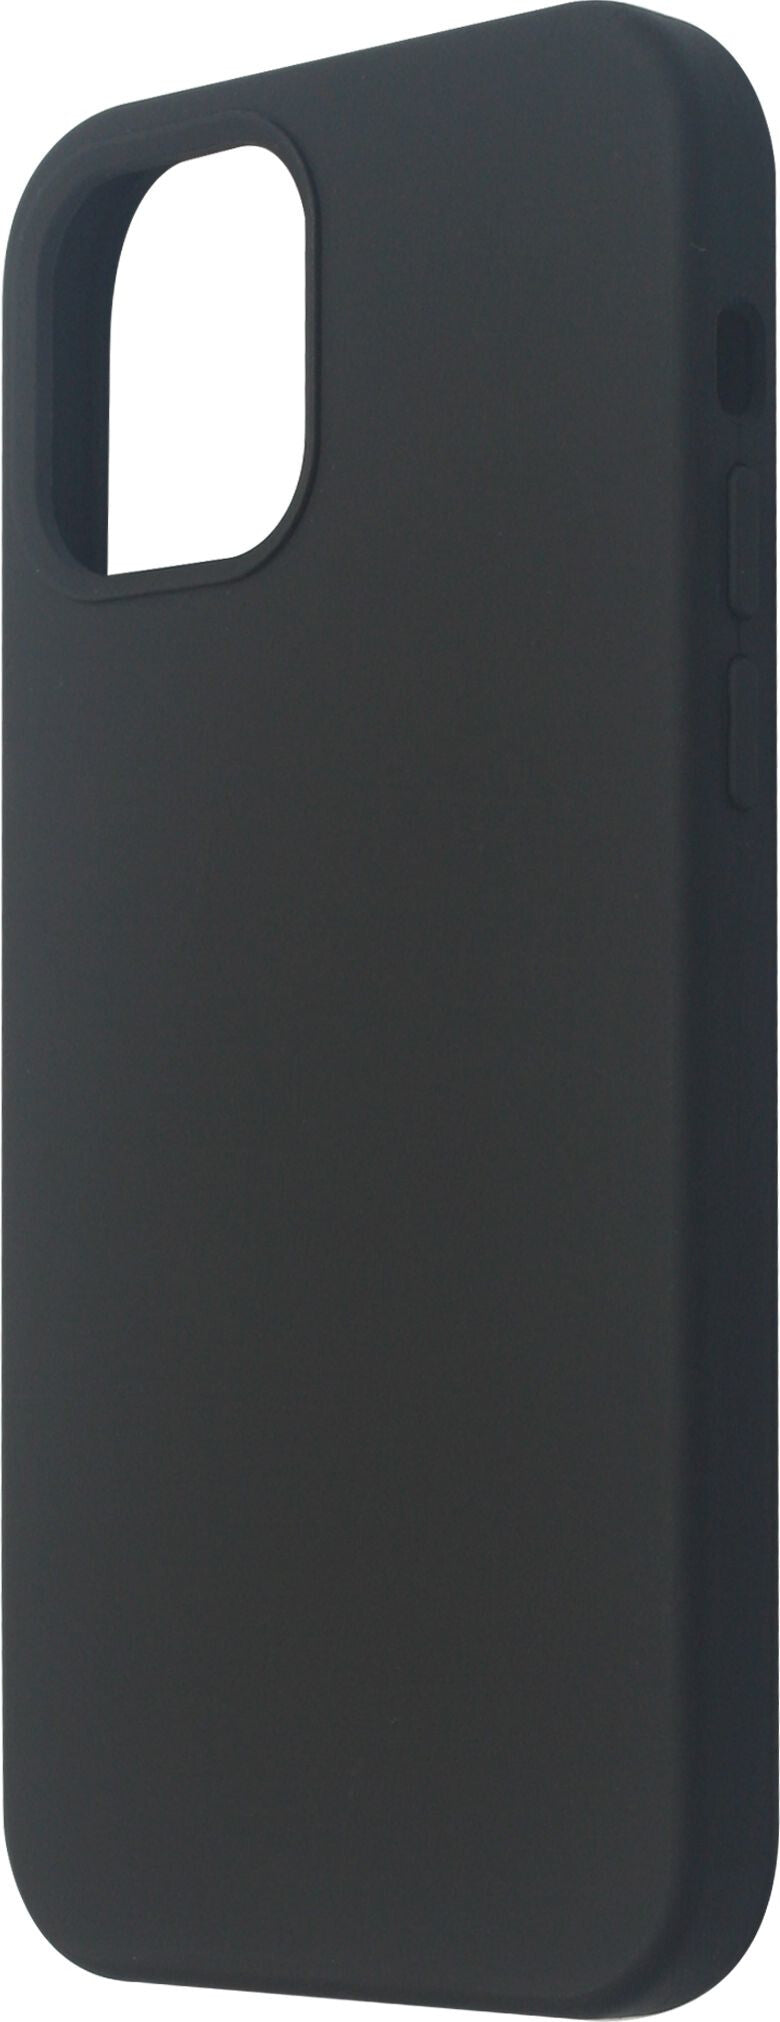 eSTUFF INFINITE RIGA silicone mobile phone case for iPhone 12 / 12 Pro in Black